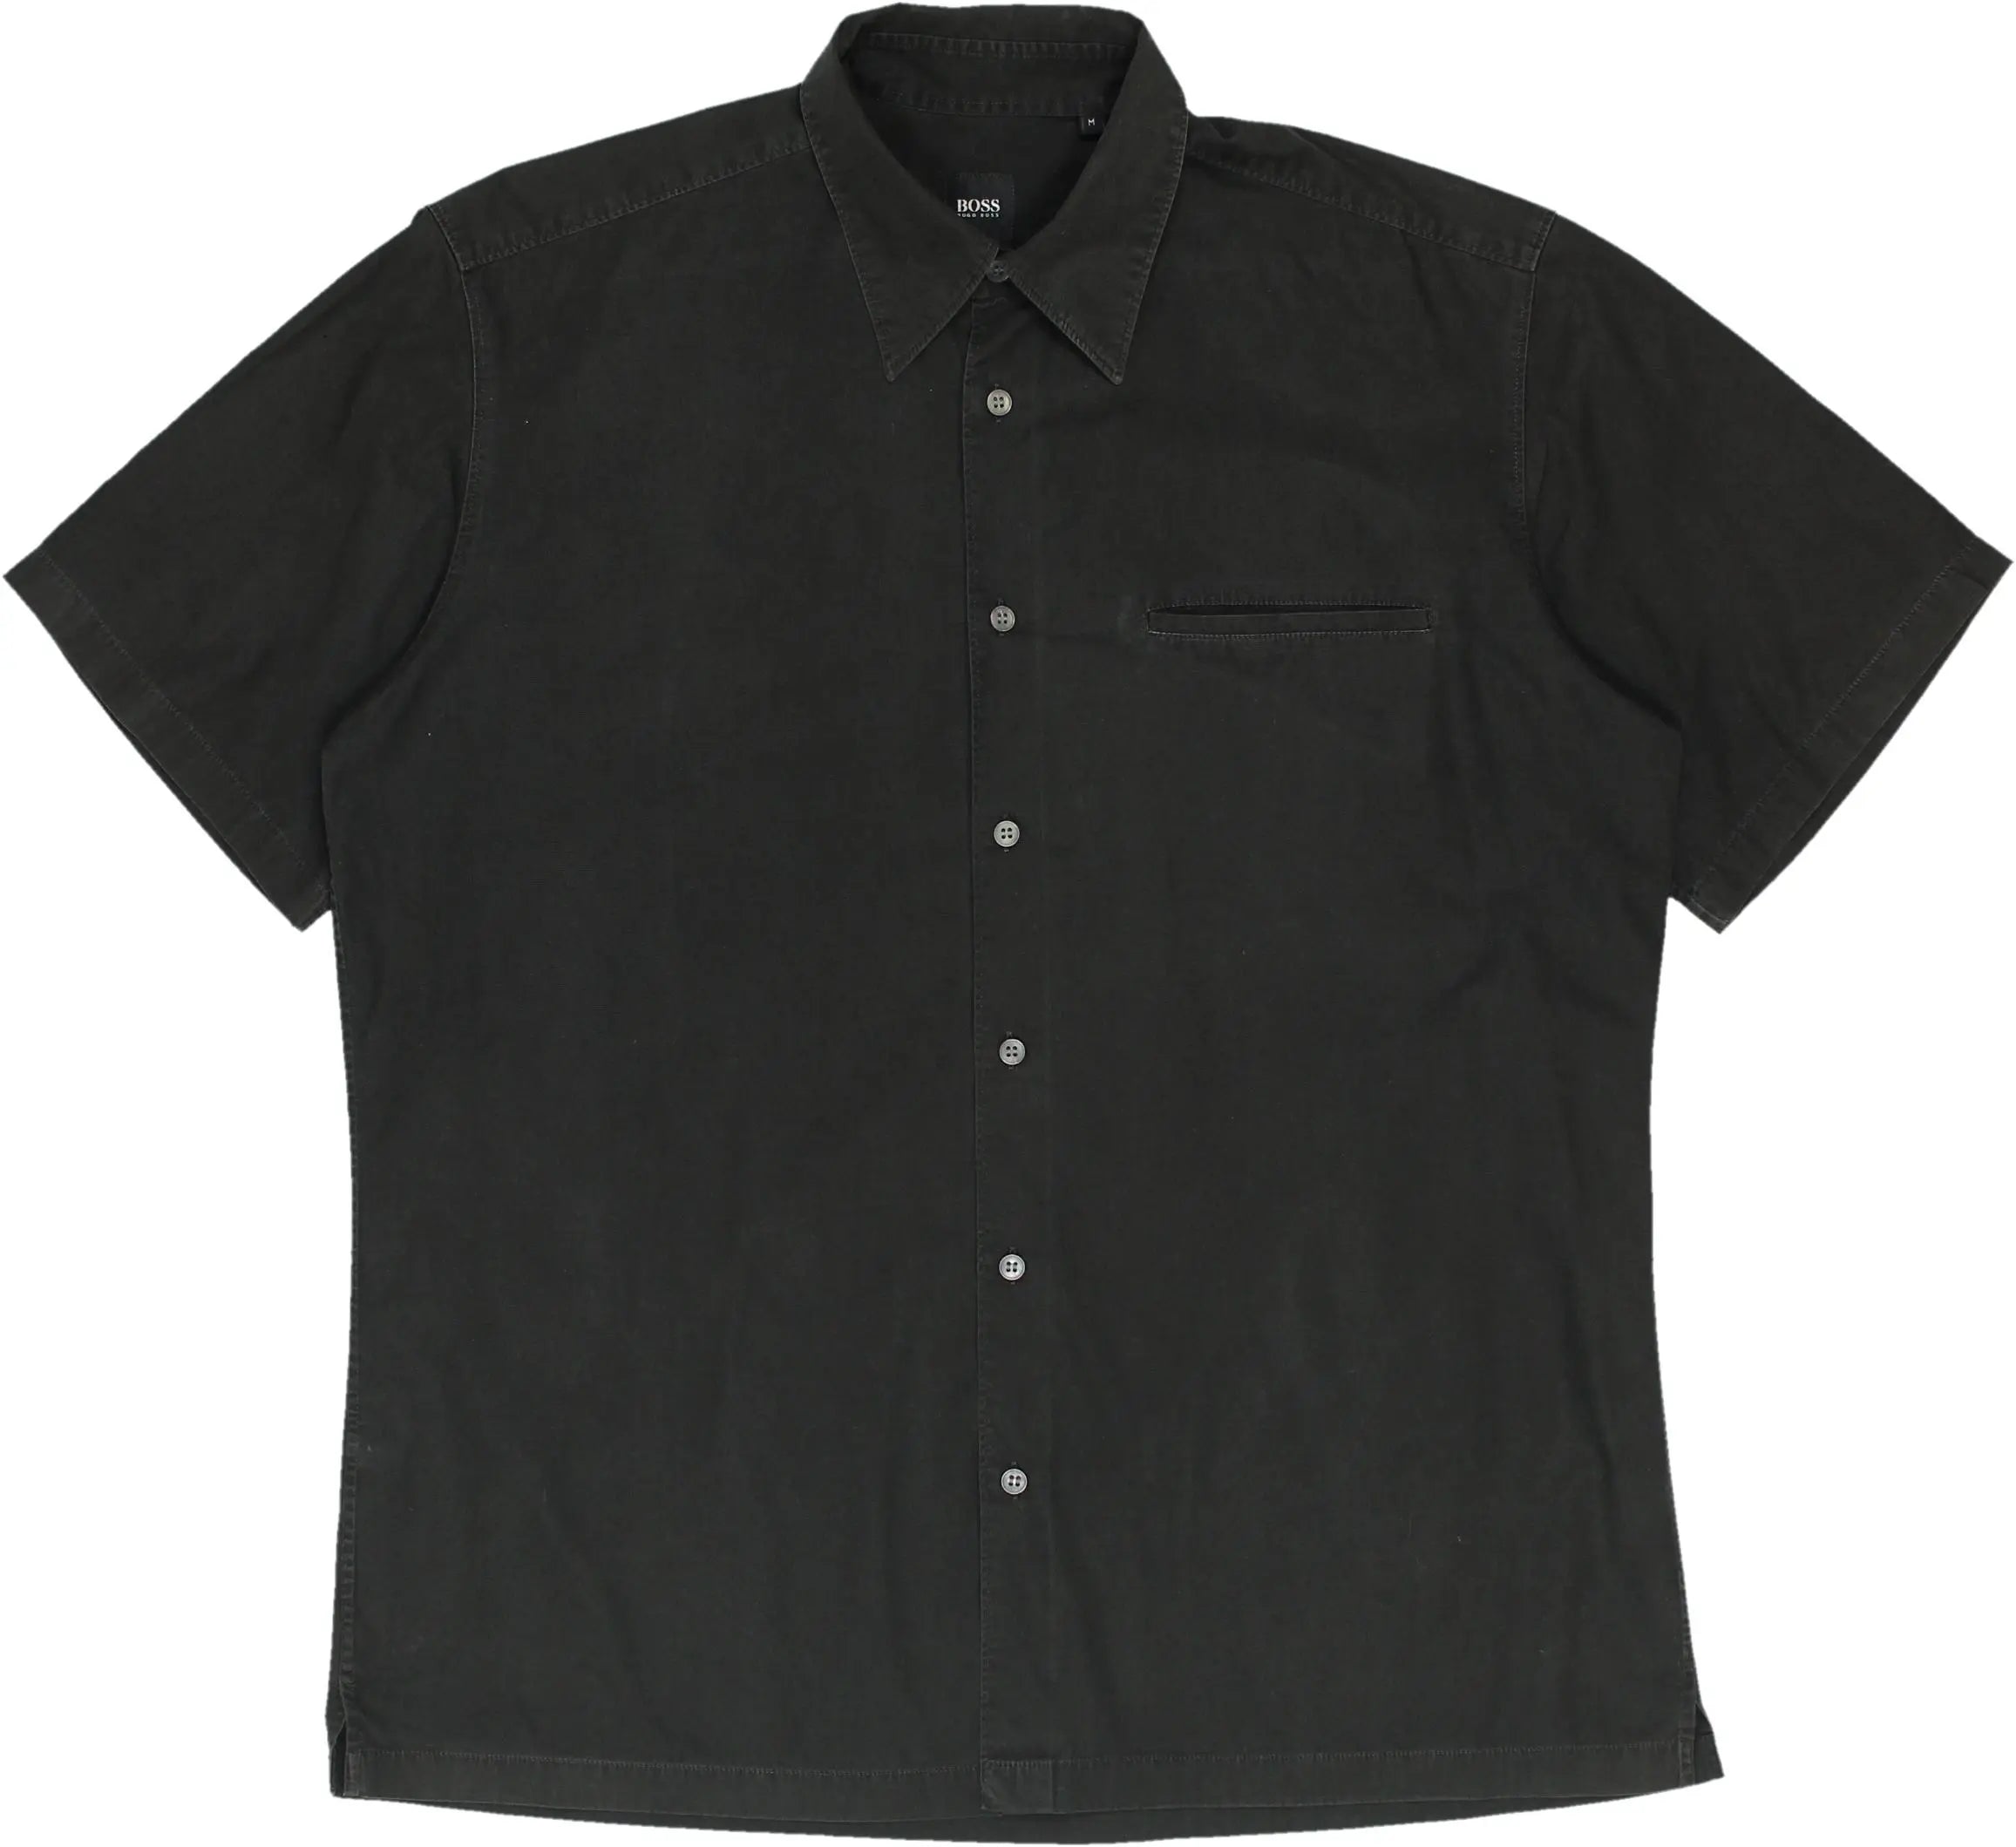 Hugo Boss - Black Short Sleeve Shirt by Hugo Boss- ThriftTale.com - Vintage and second handclothing